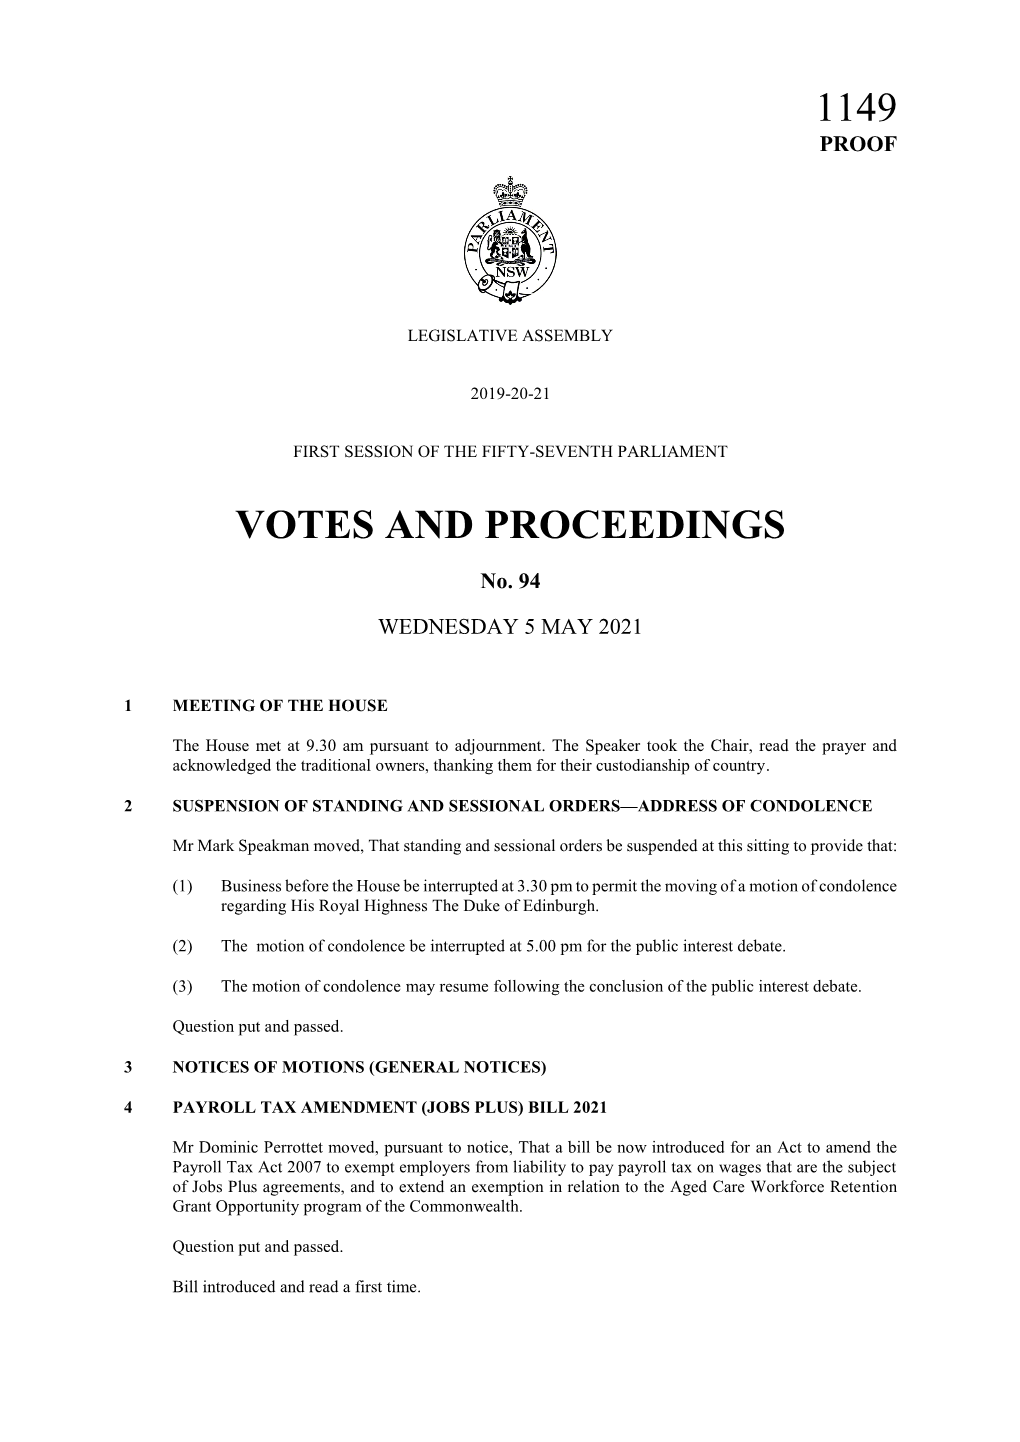 1149 Votes and Proceedings